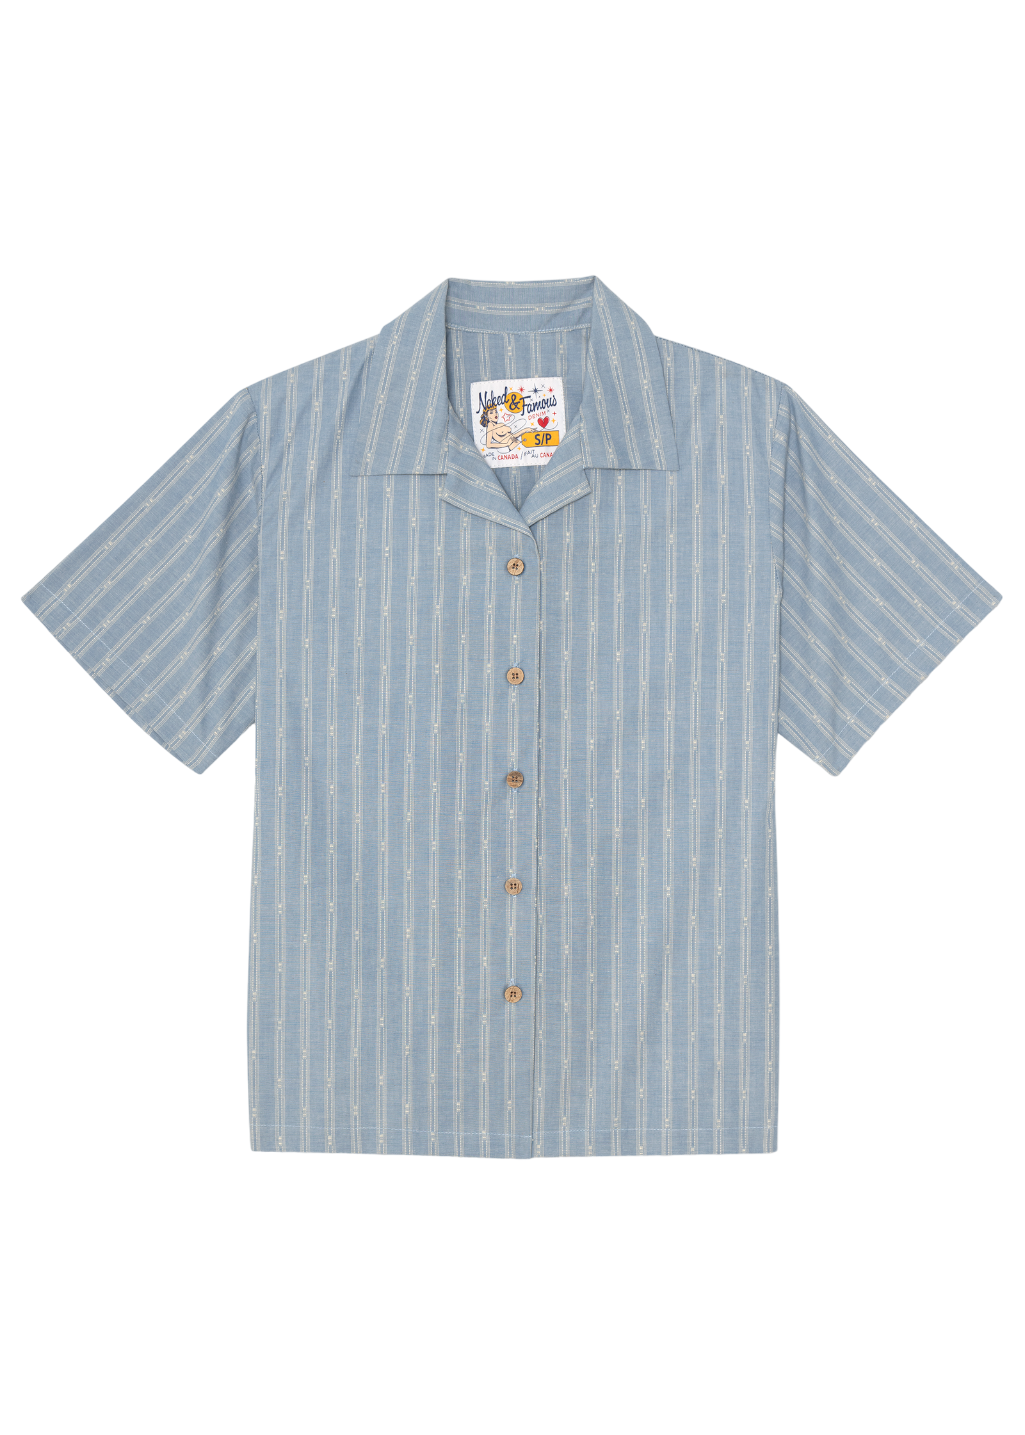 Naked & Famous Denim - Camp Collar Shirt - Vintage Dobby Stripes - Pale Blue